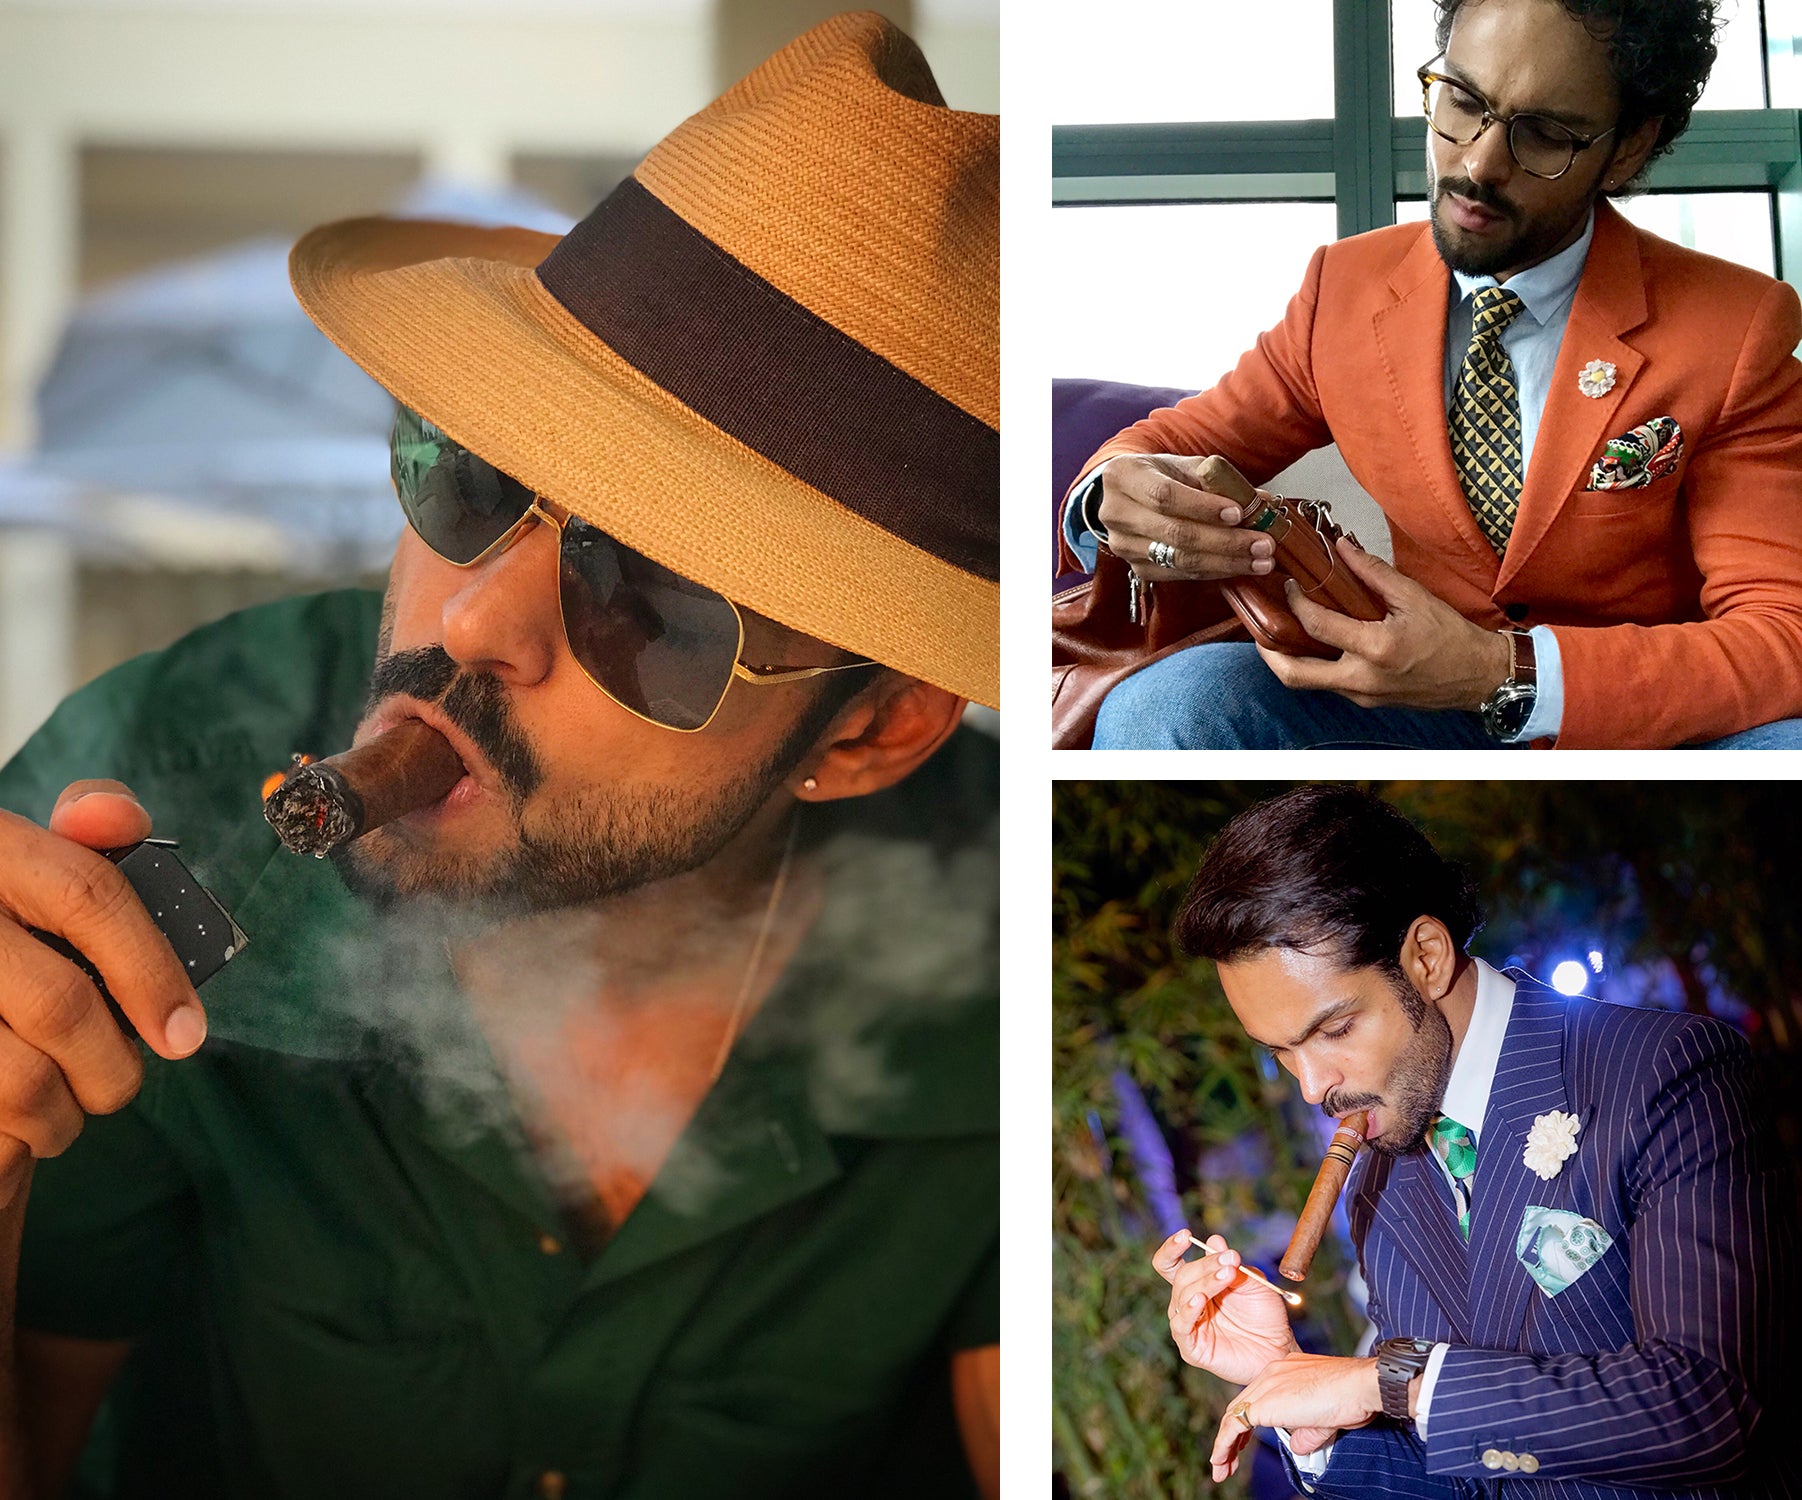 Jasim Ahmed parla sigari cubani, stile di vita e sigari di moda EGM